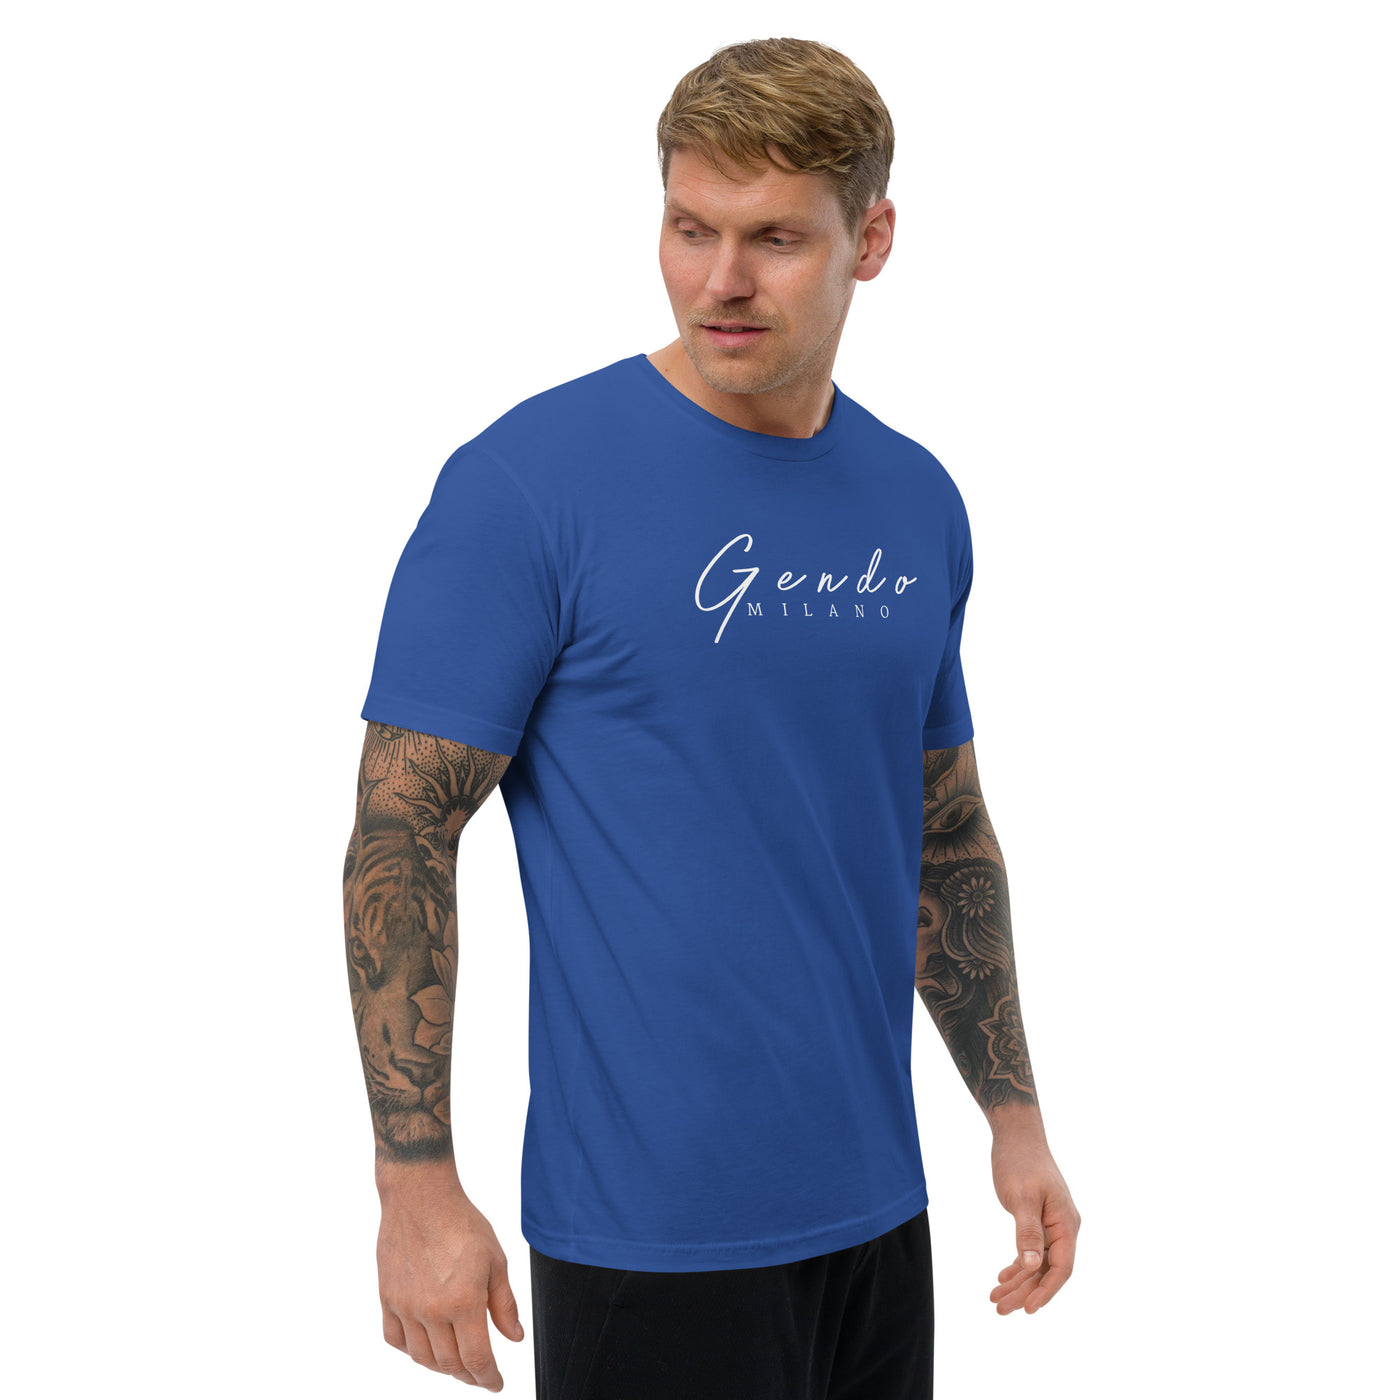 Gendo Milano Sport T-Shirt (3 Colors)